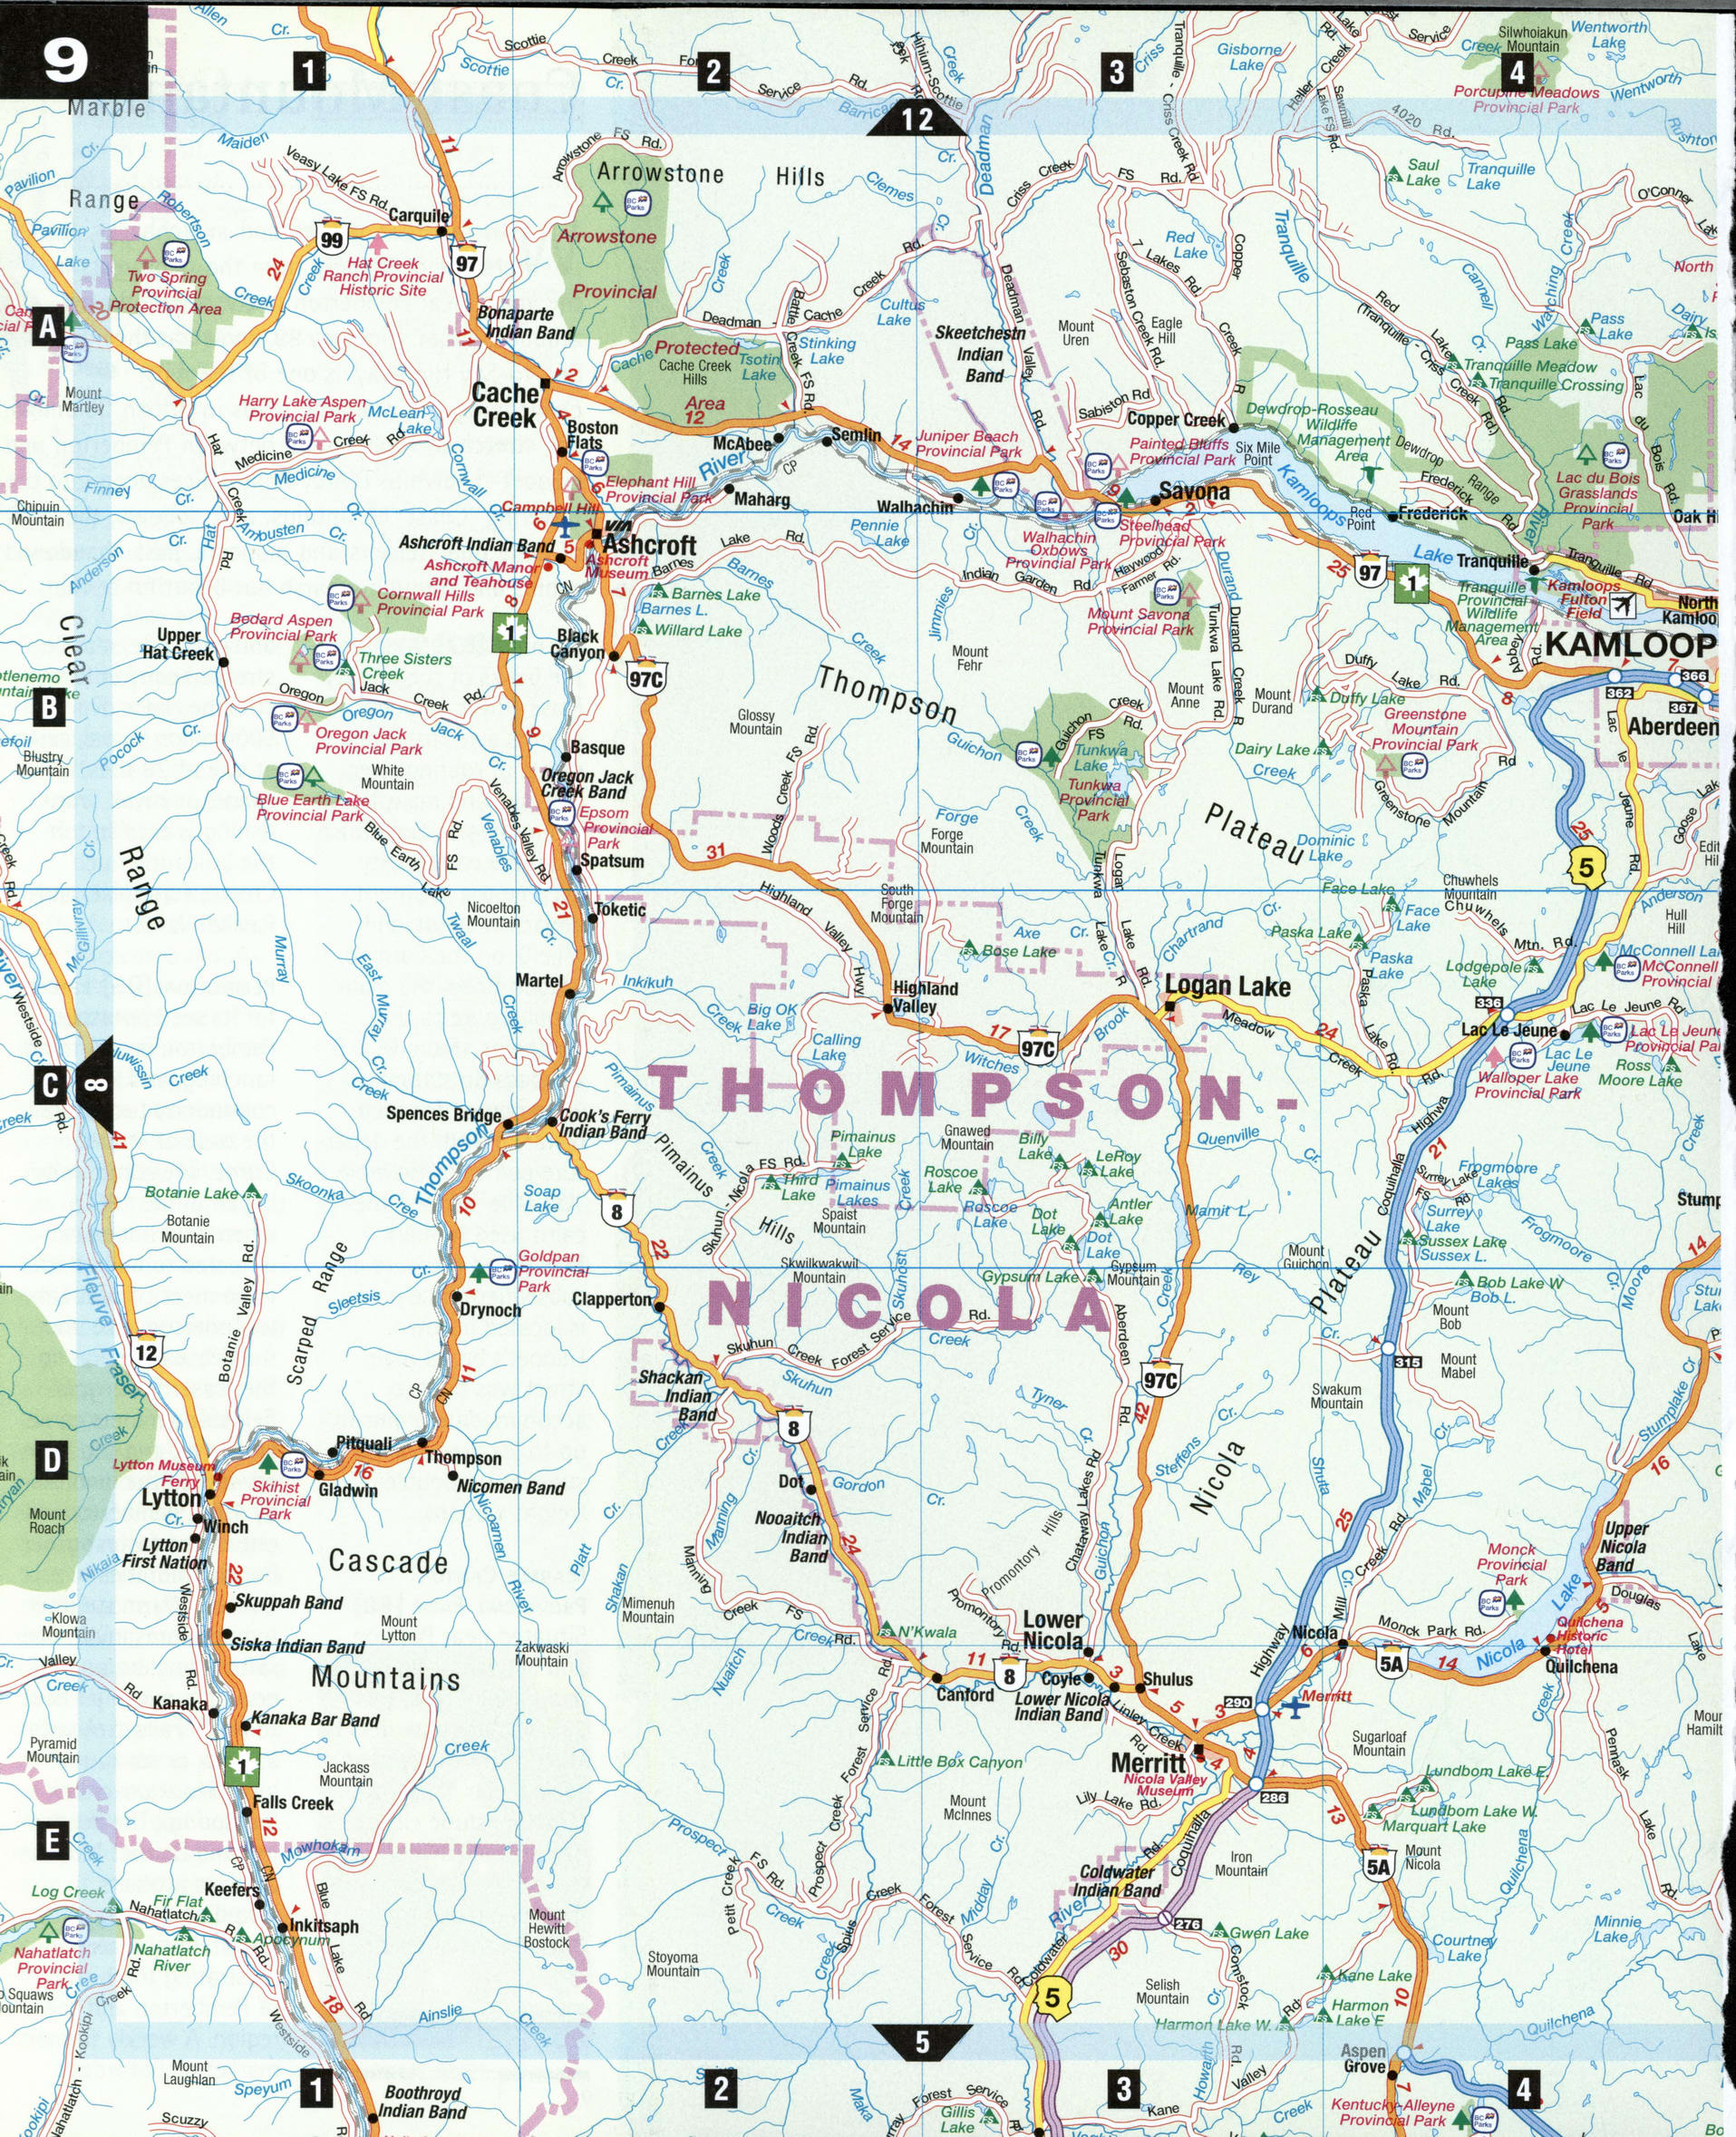 Thompson Nicola map